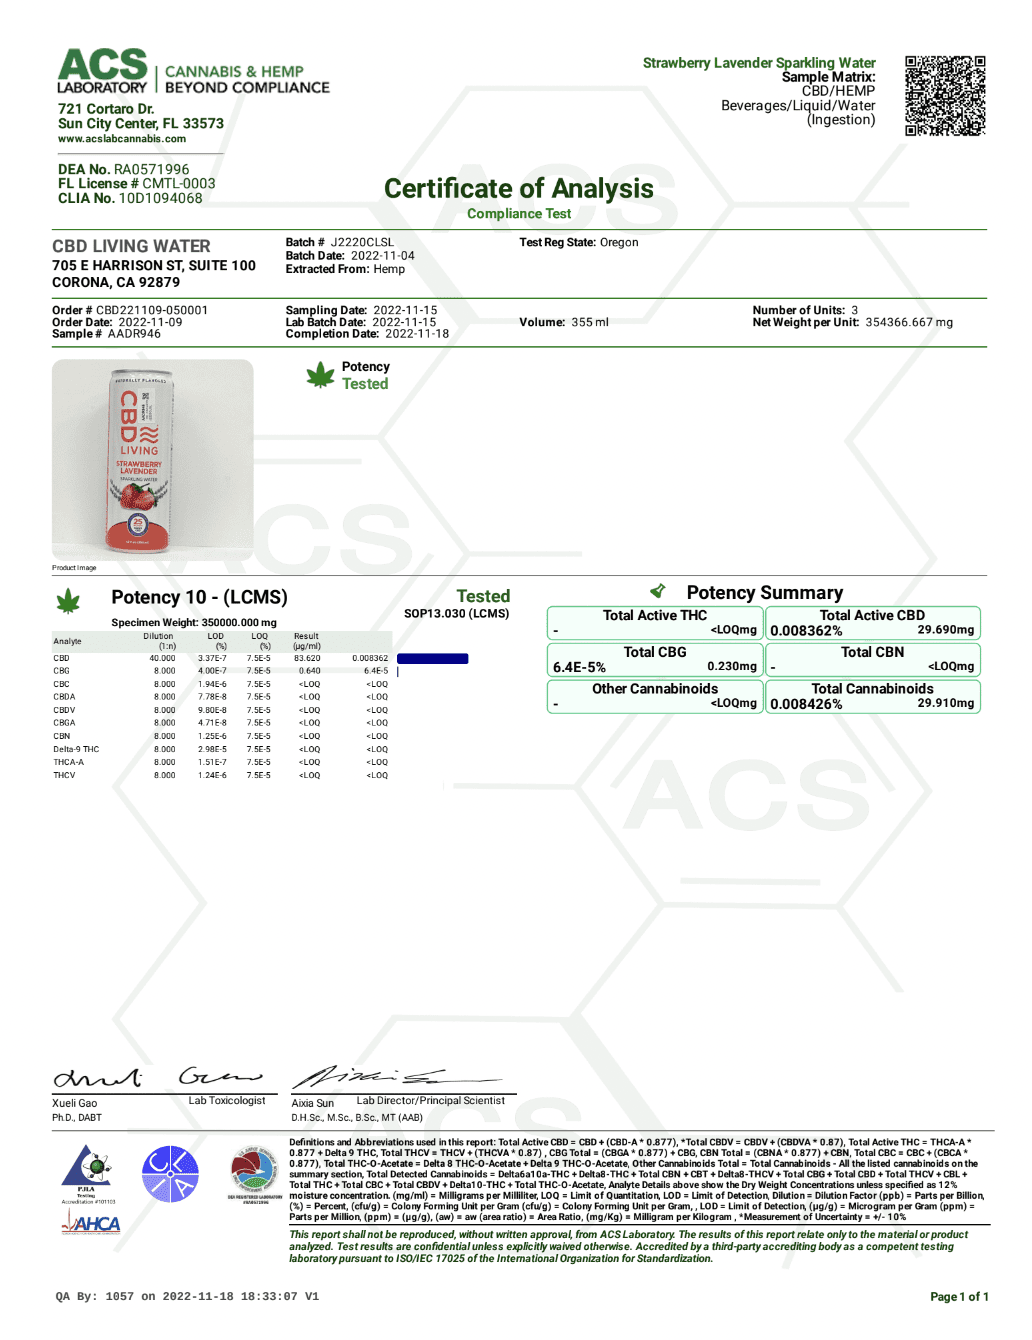 Strawberry Lavendar Certificate of Analysis